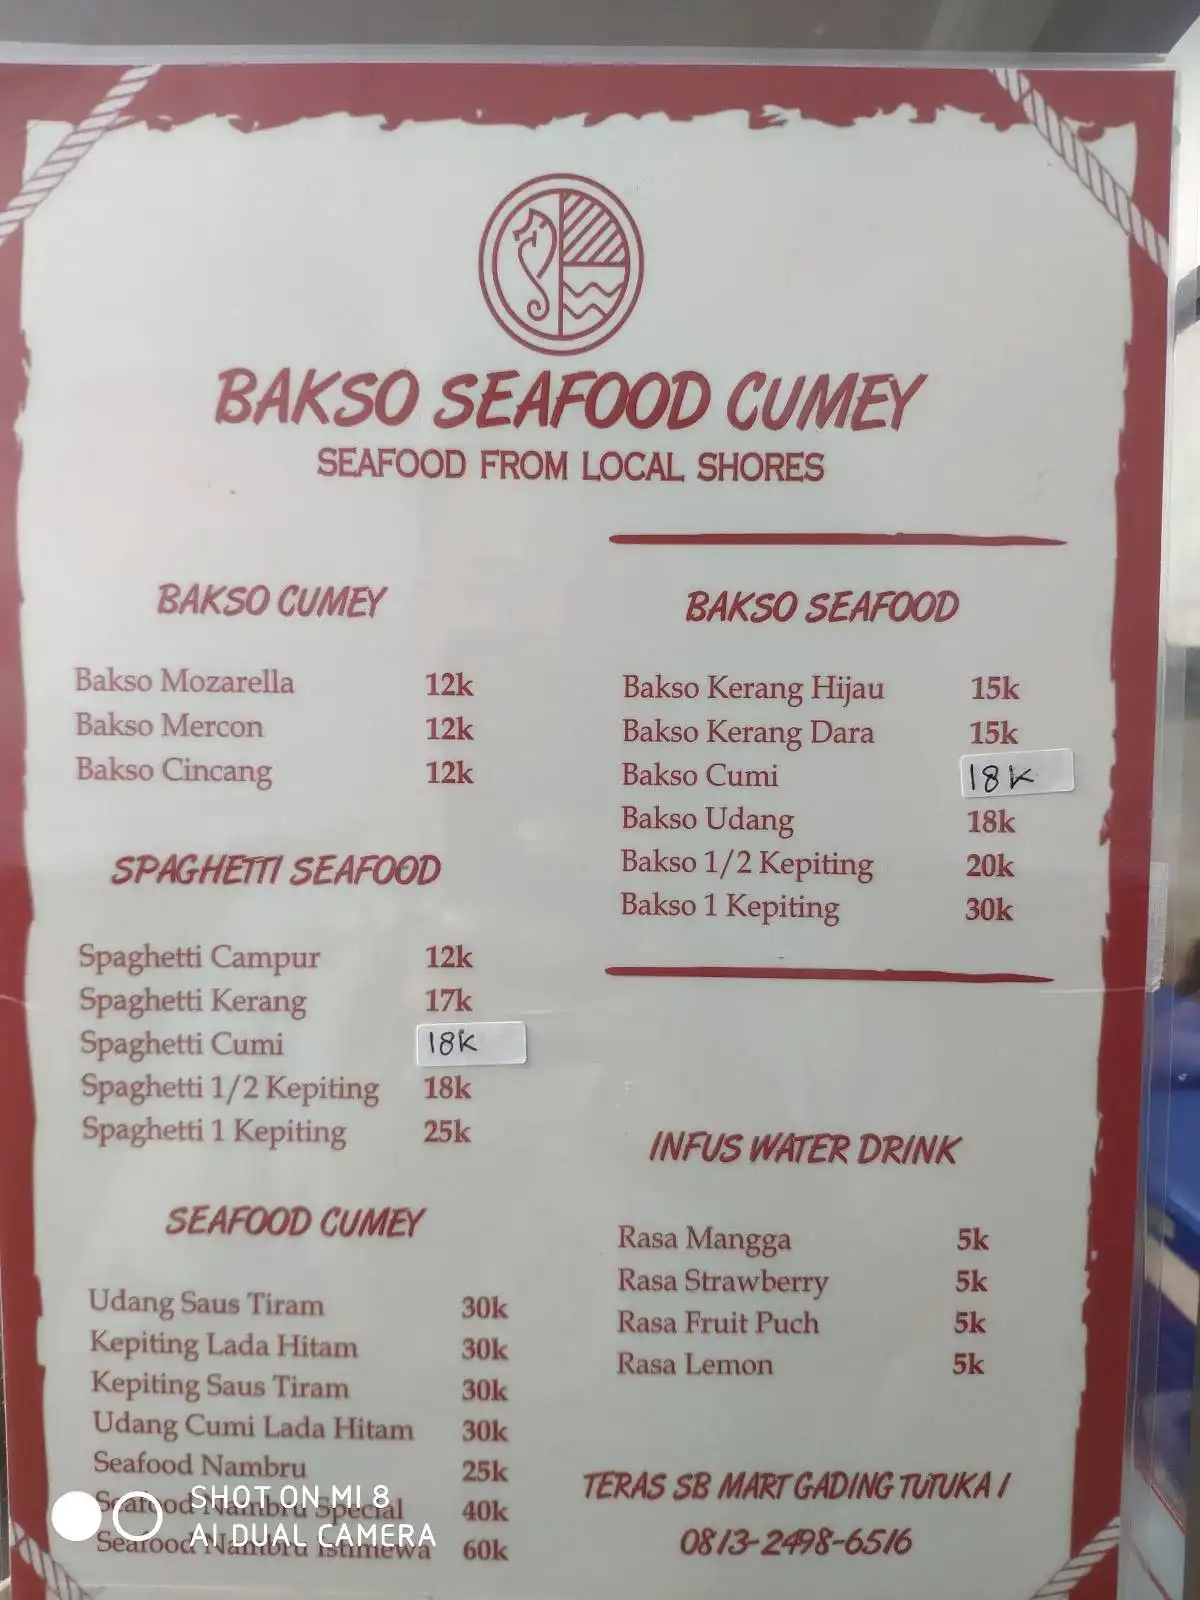 Bakso seafood cumey